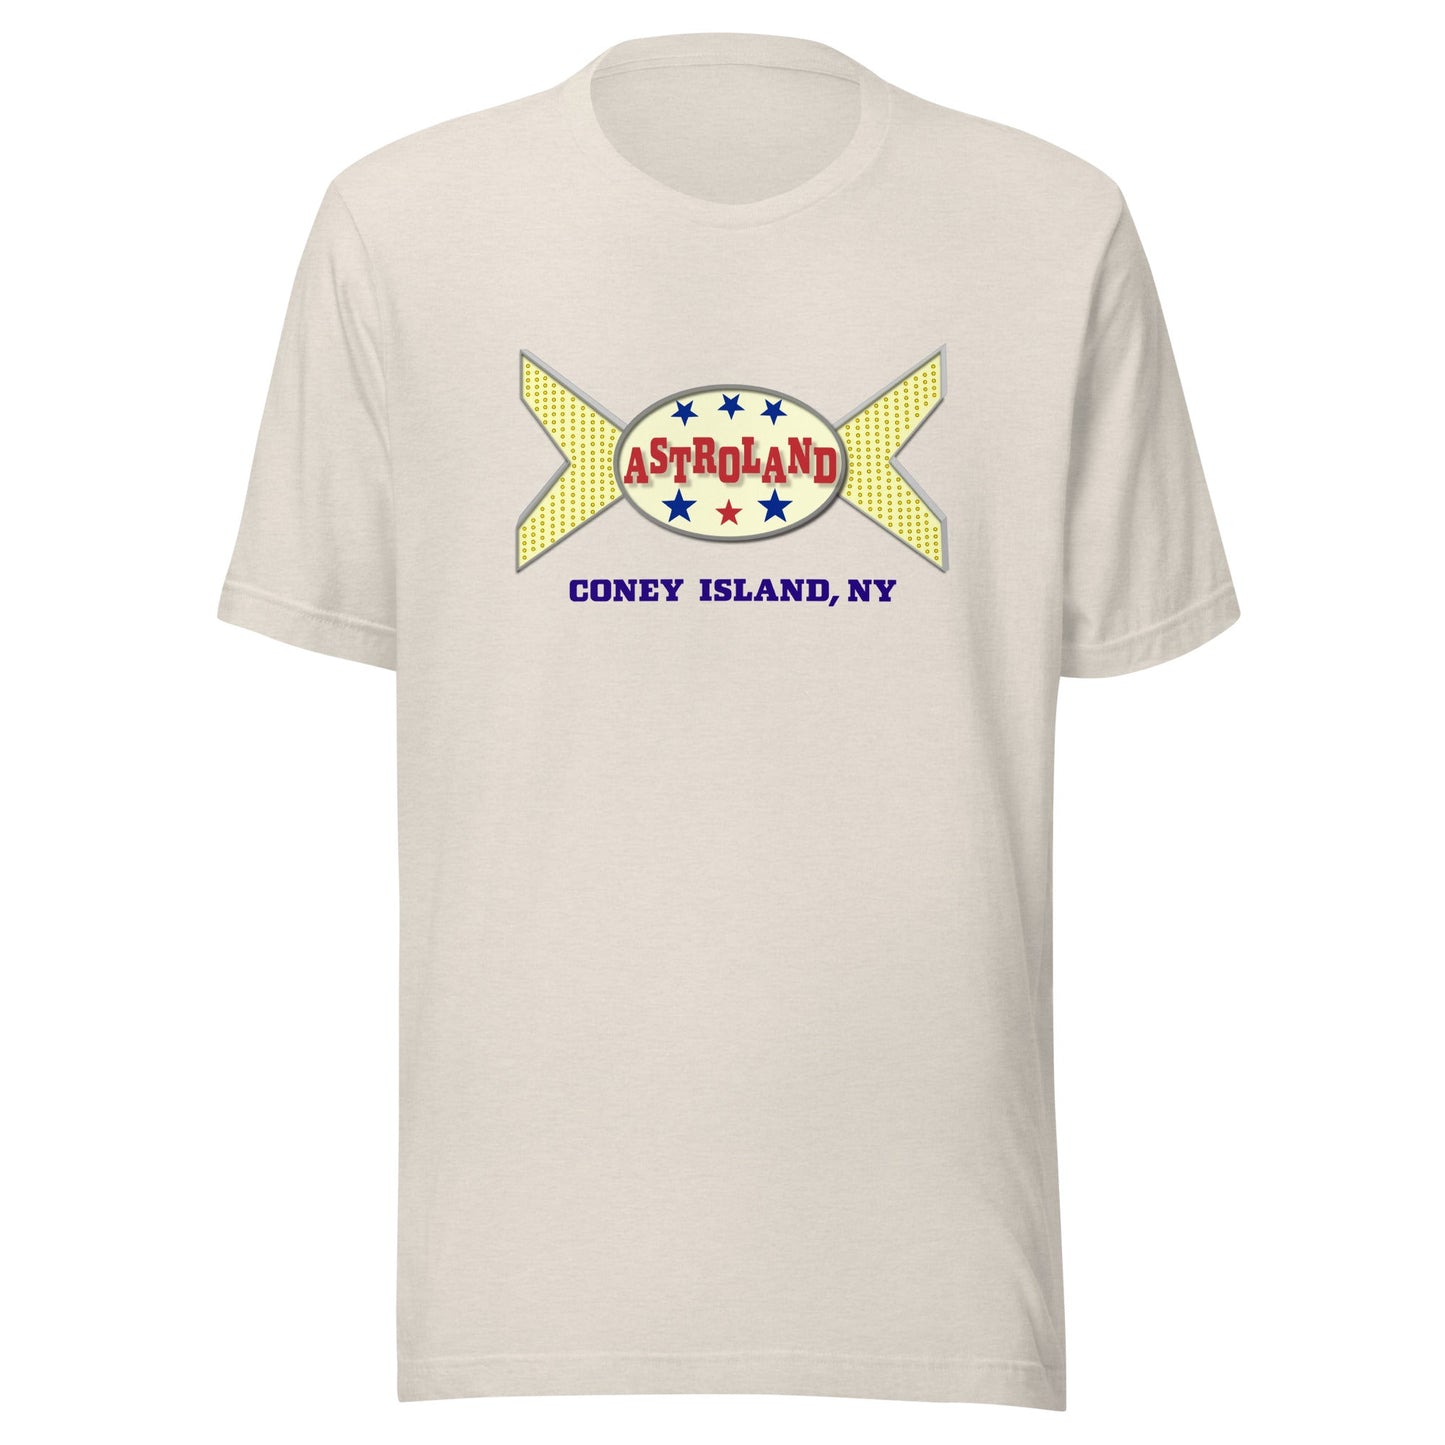 Astroland T-Shirt - Coney Island, NY - Retro Amusement Park Vintage Tee